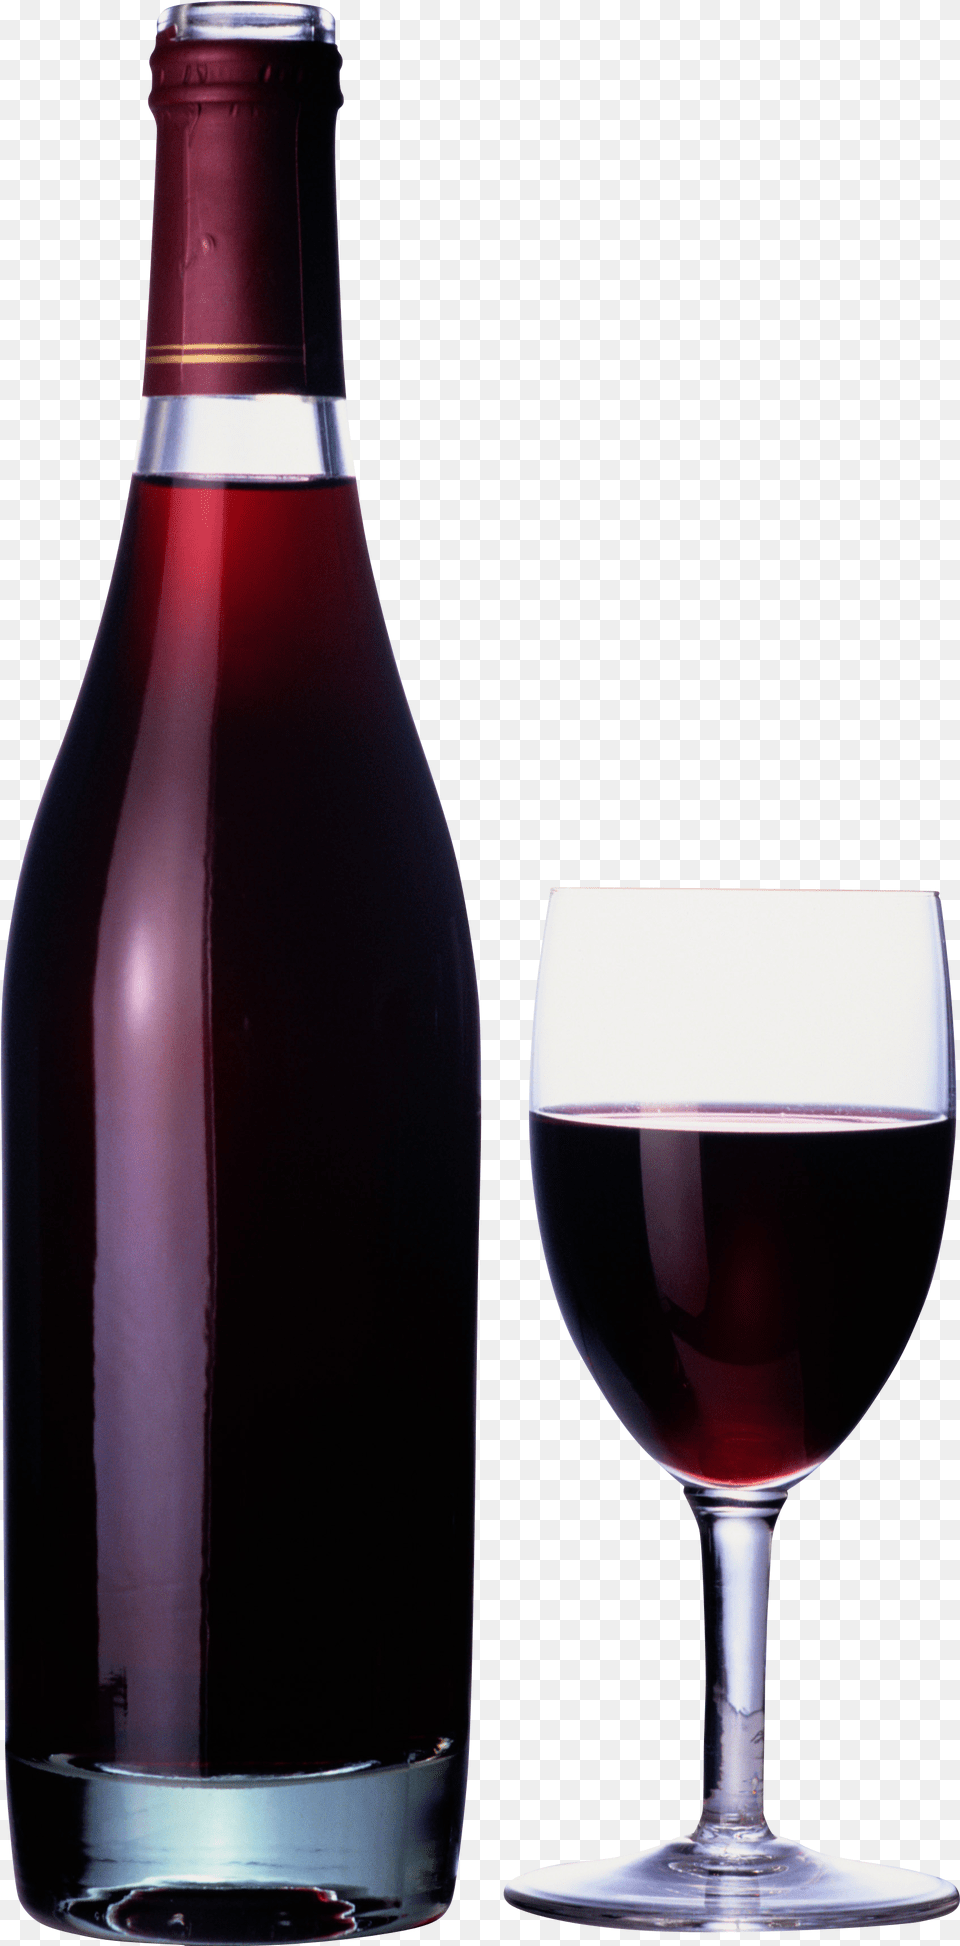 Wine Bottle And Glass Transparent Transparent Background Wine Bottle, Alcohol, Beverage, Liquor, Red Wine Png